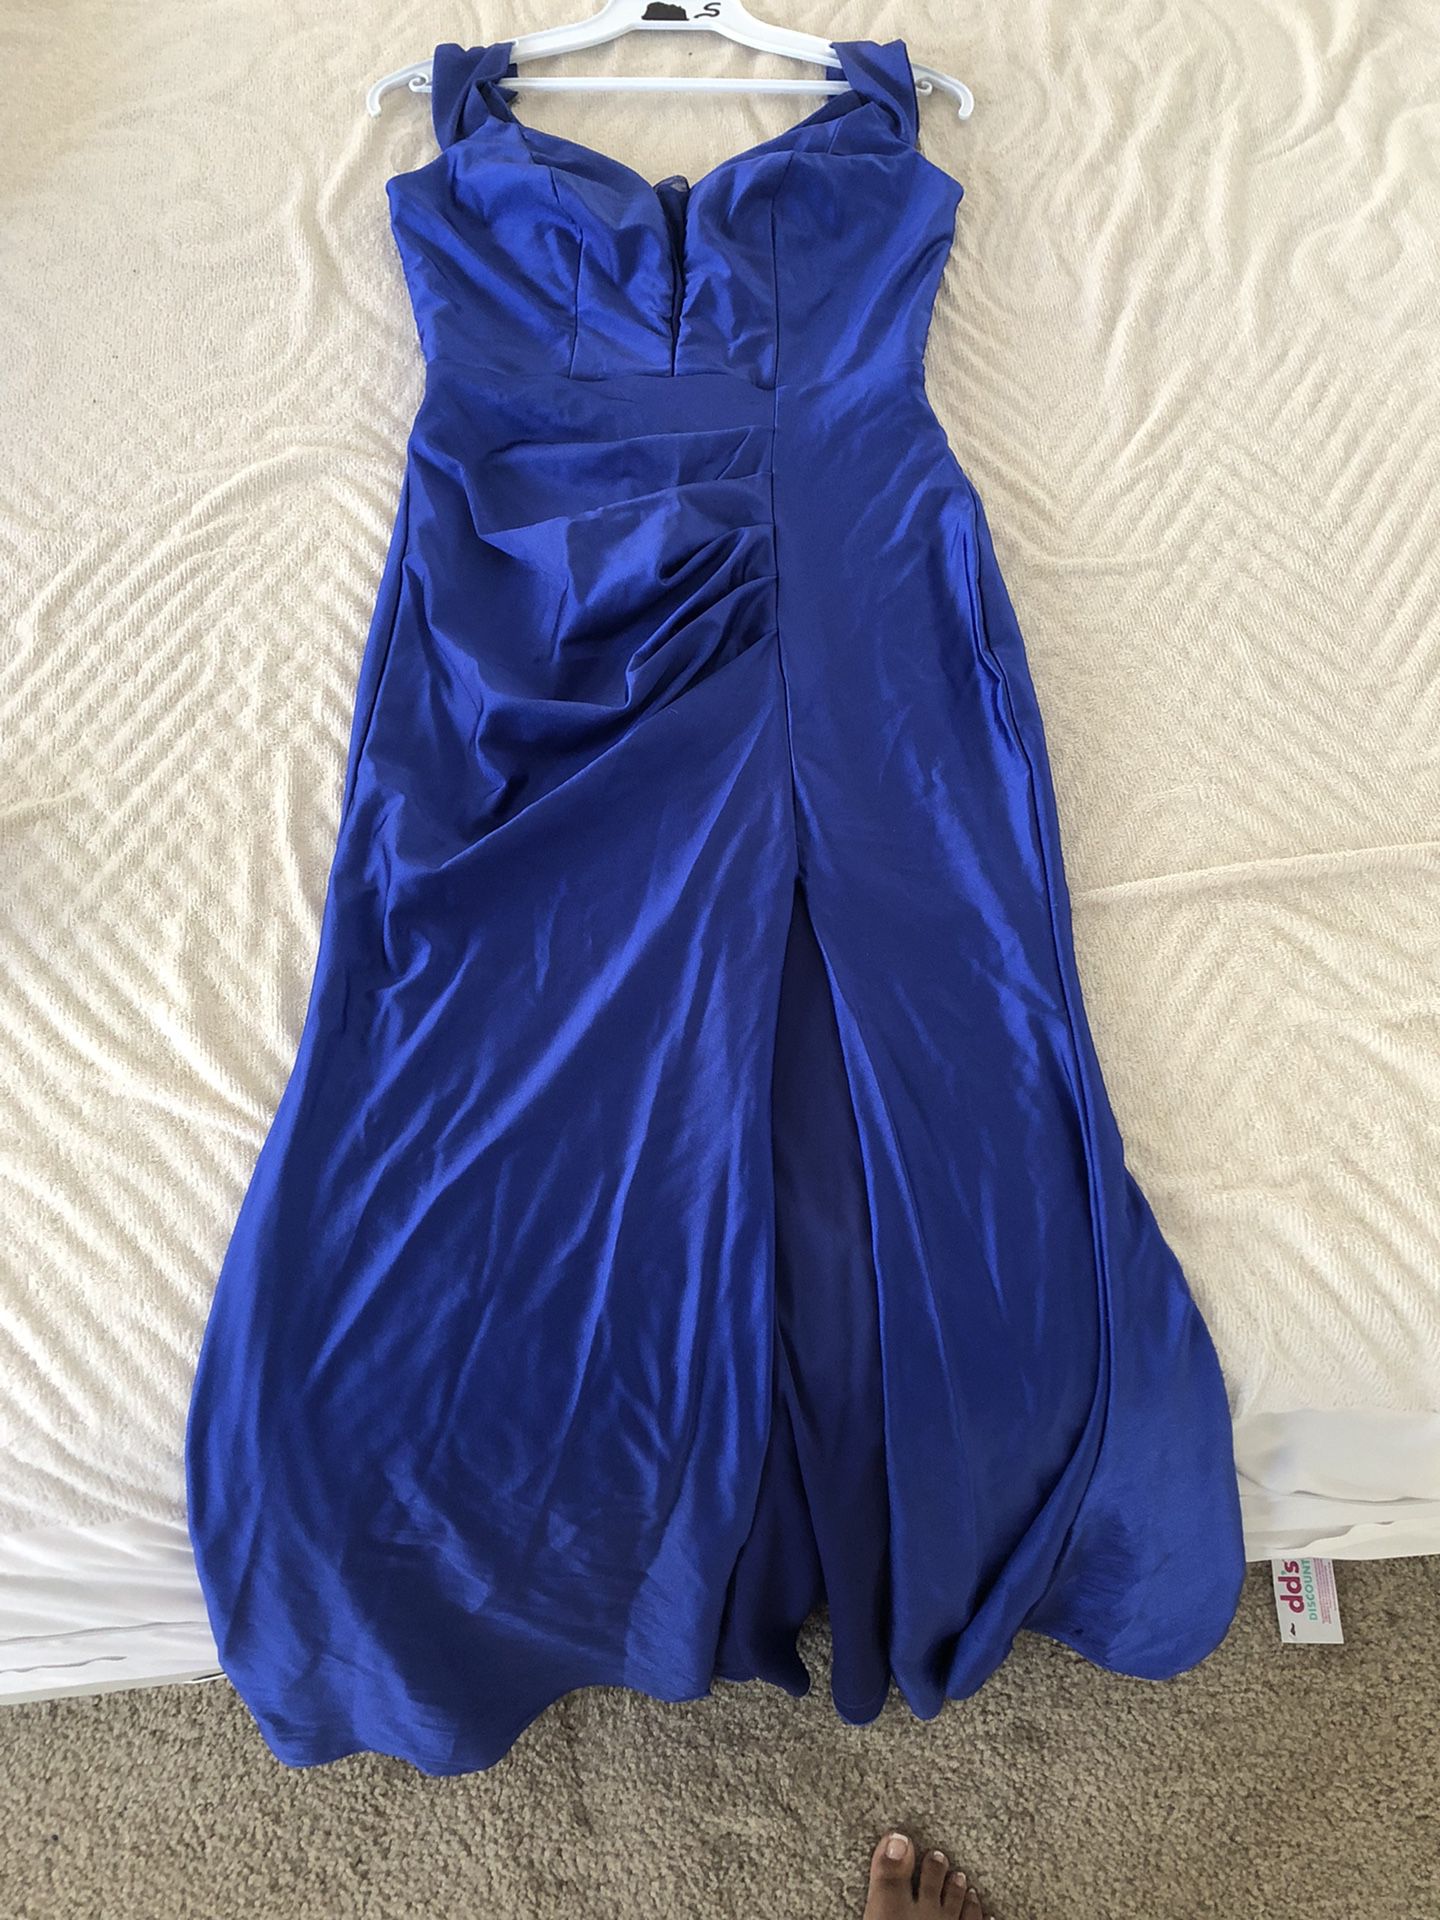 Formal Royal Blue Dress